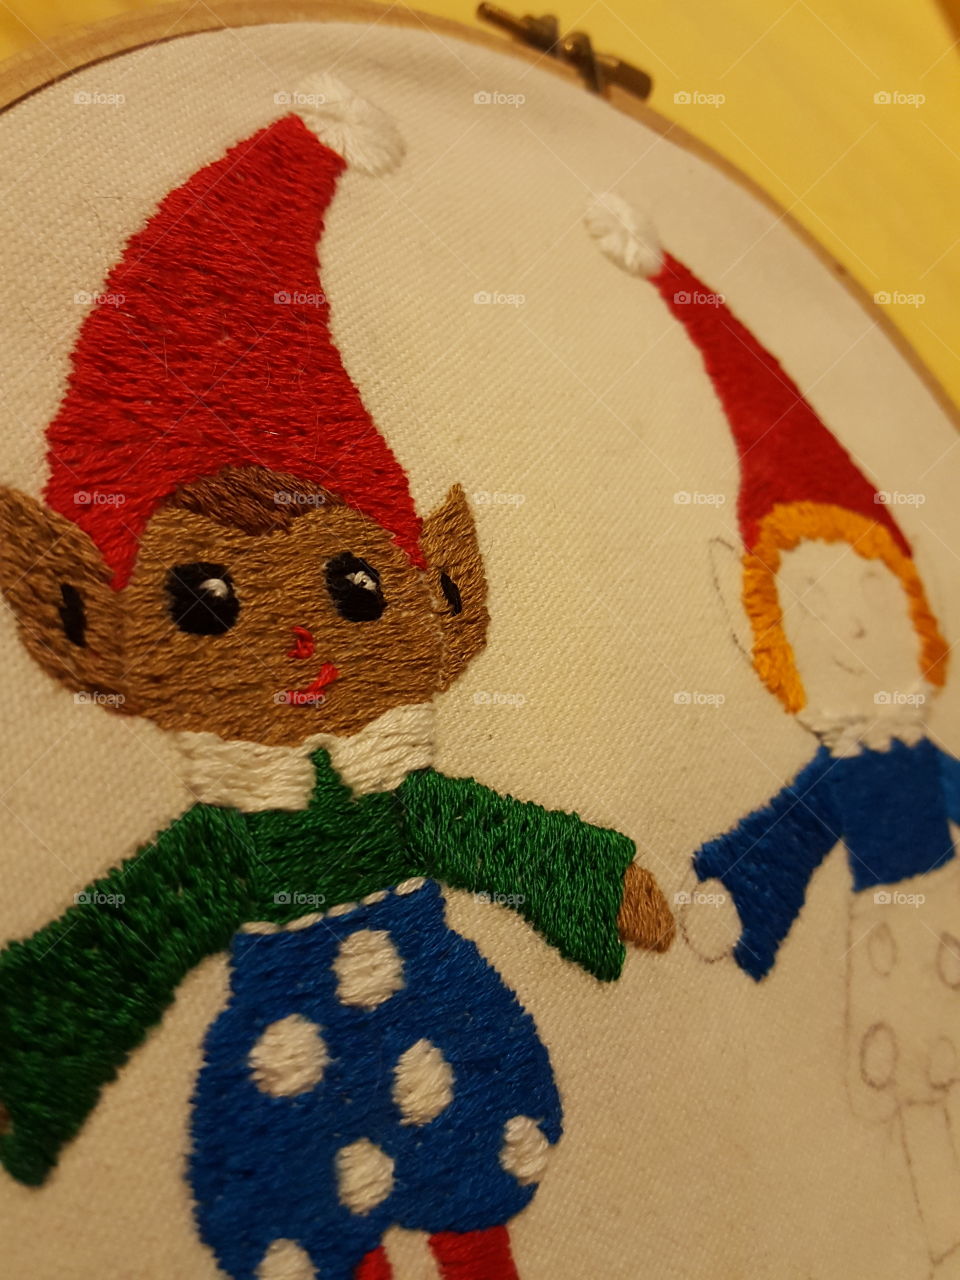 Embroidering Santa's Elves